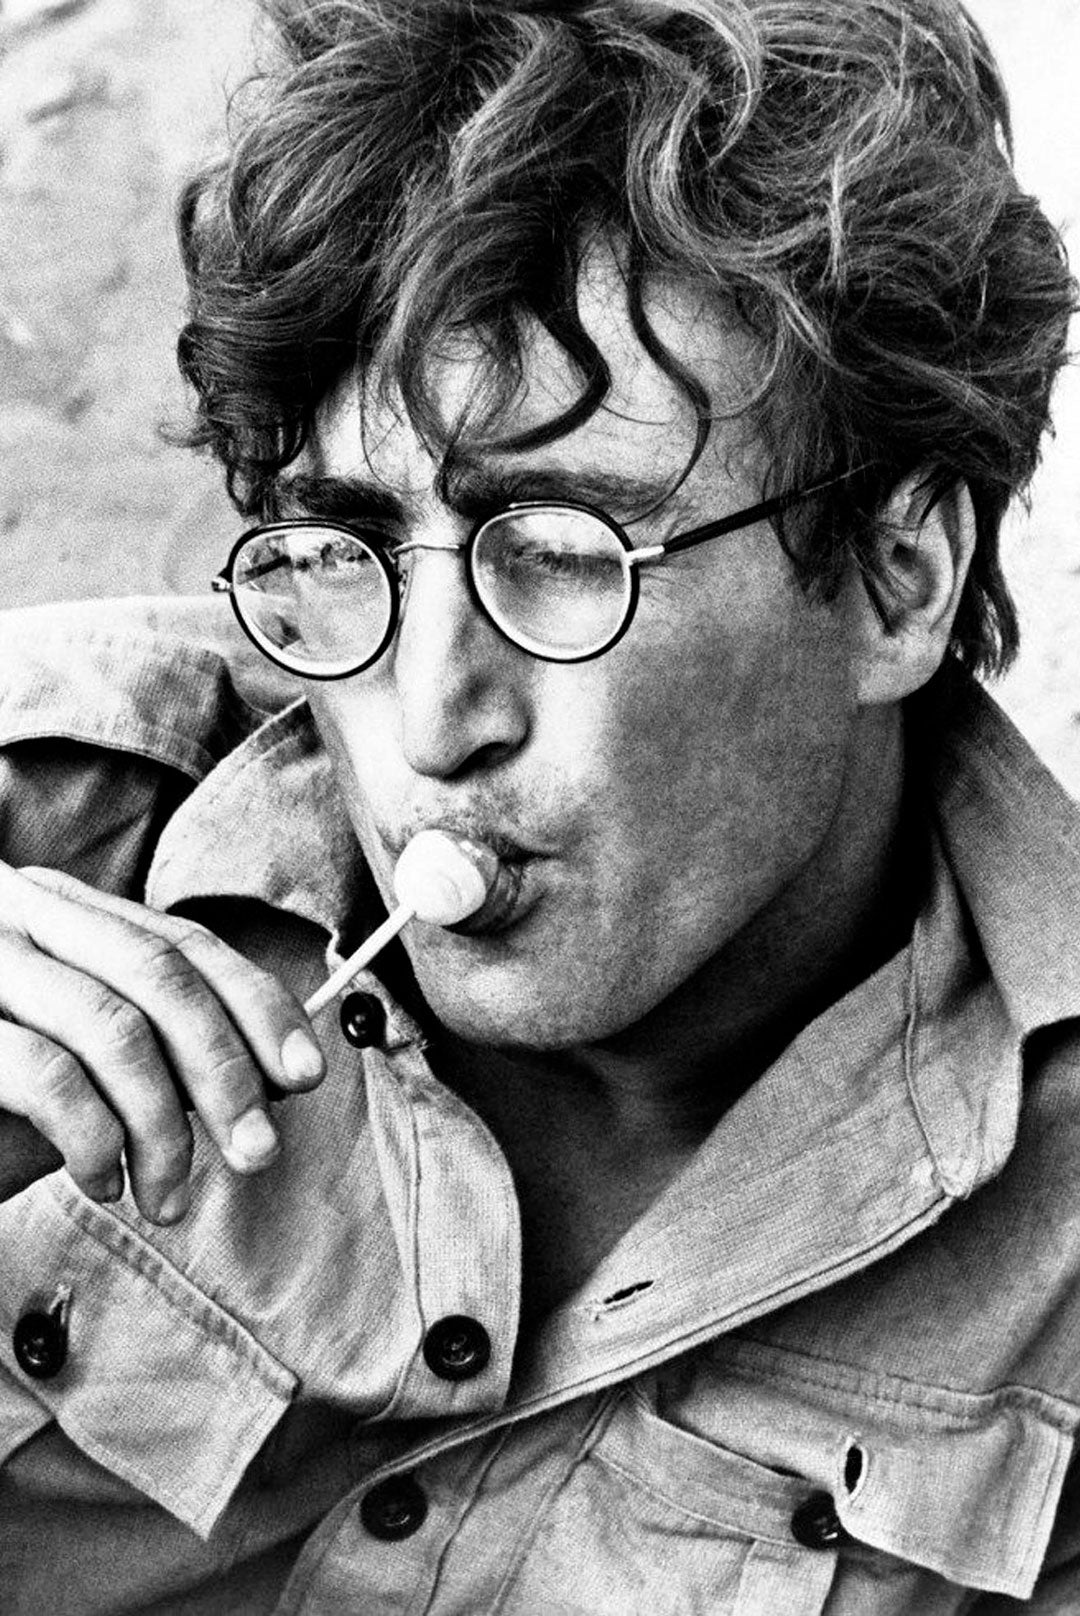 NIEEPA John Lennon Sunglasses Review | DO IT FOR CLOUT - YouTube